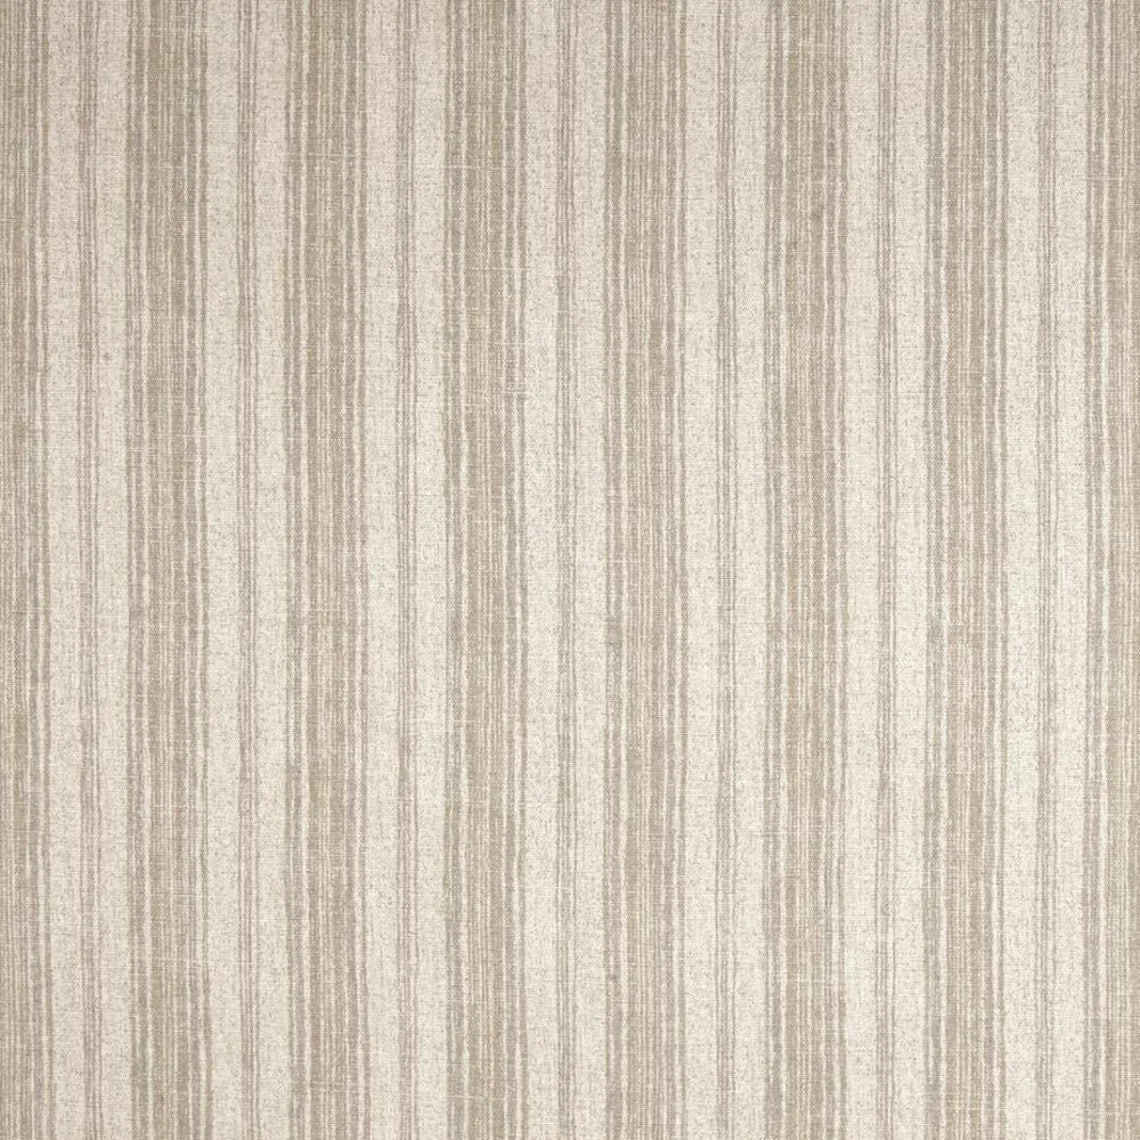 gathered bedskirt in brunswick stone beige stripe